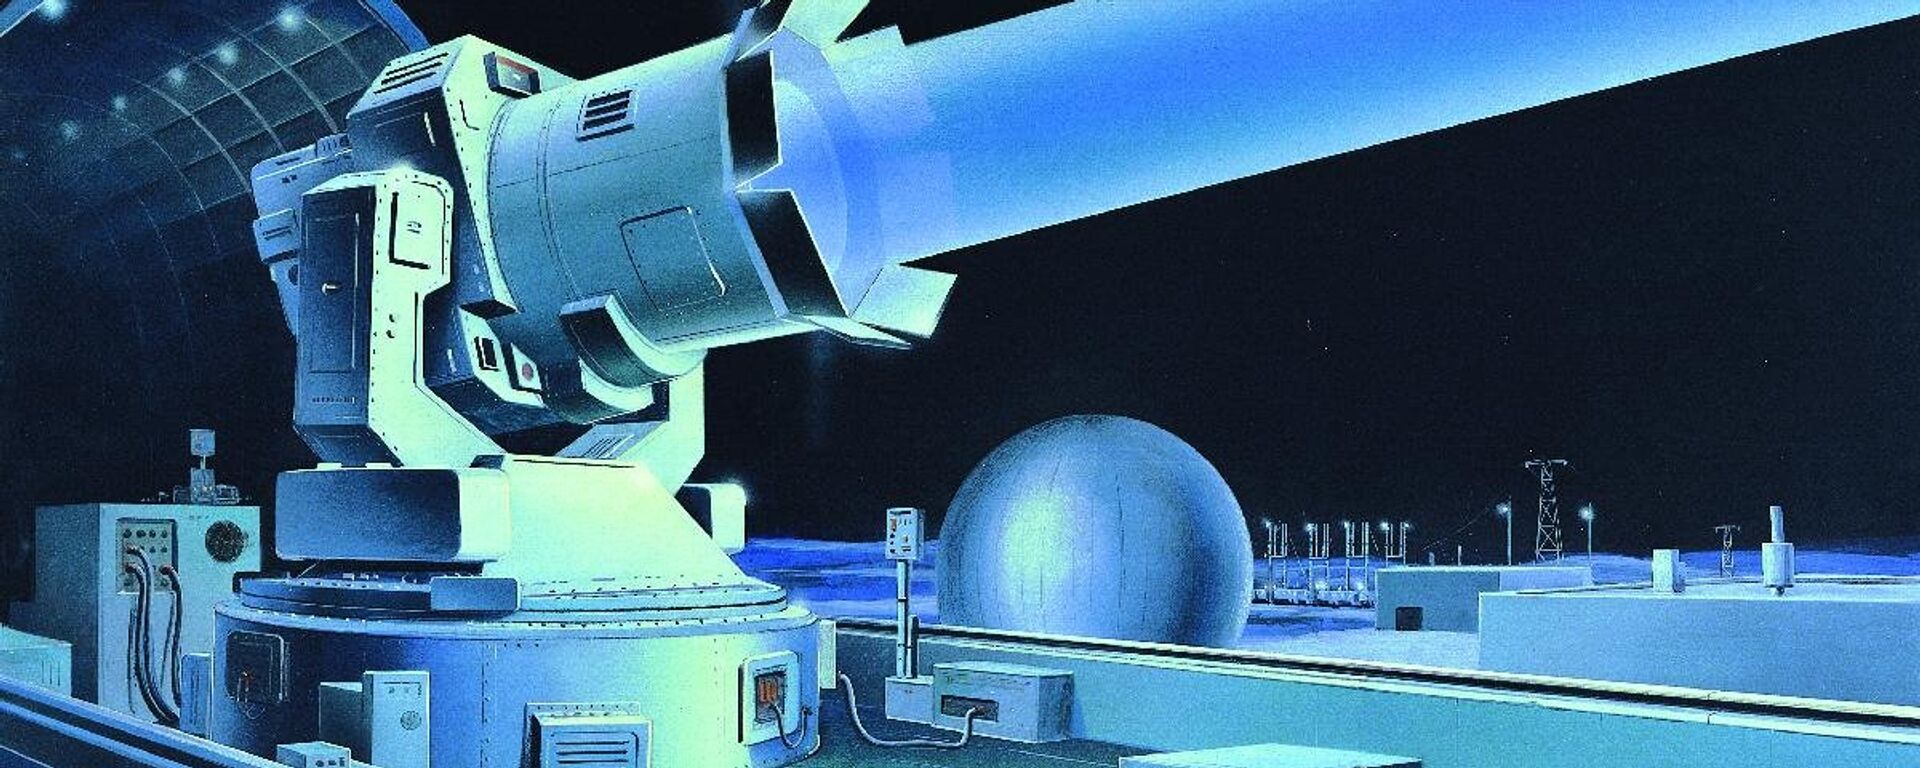 Soviet ground-based laser. Illustration from 1980s Defense Intelligence Agency publication 'Soviet Military Power'. - Sputnik International, 1920, 01.08.2020